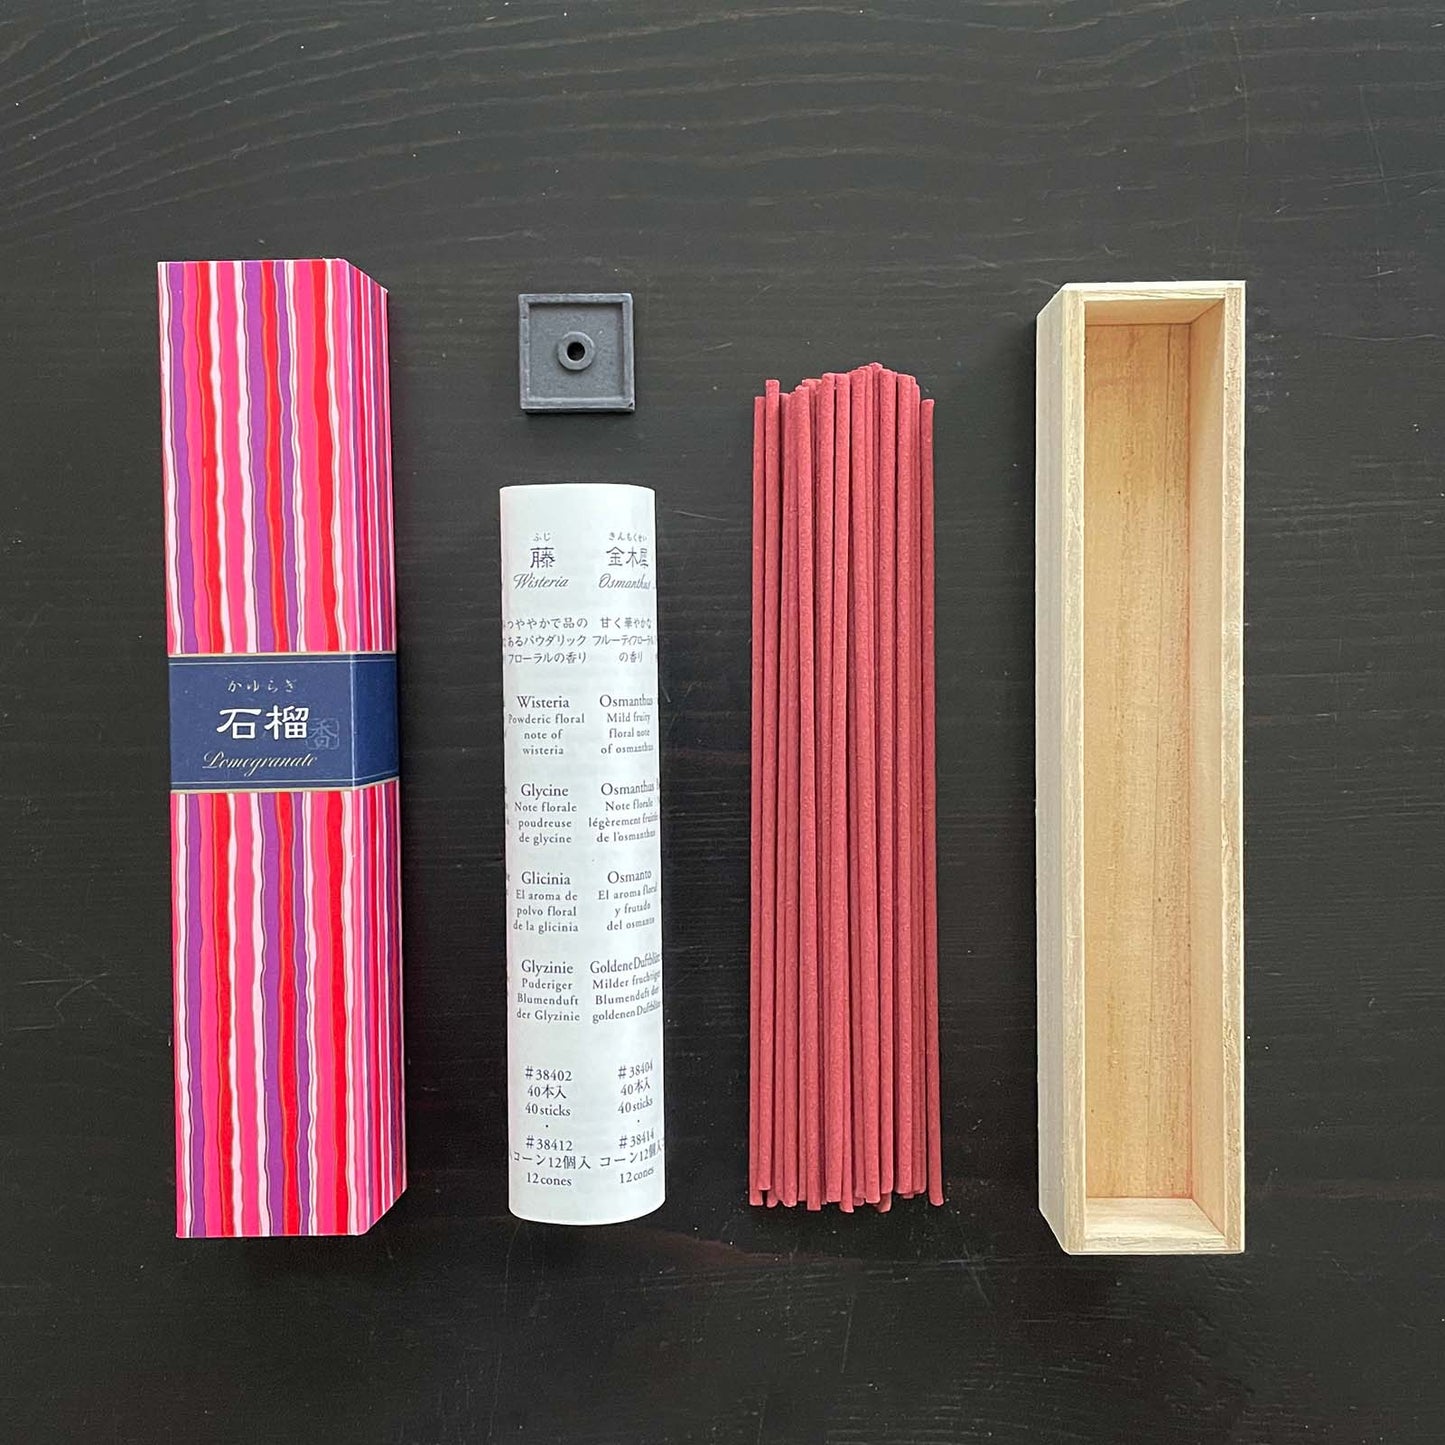 Kayuragi Incense Sticks_Lifestyle_Incense_Japanese Style_Traditional_1_2_3_4_5_6_7_8_9